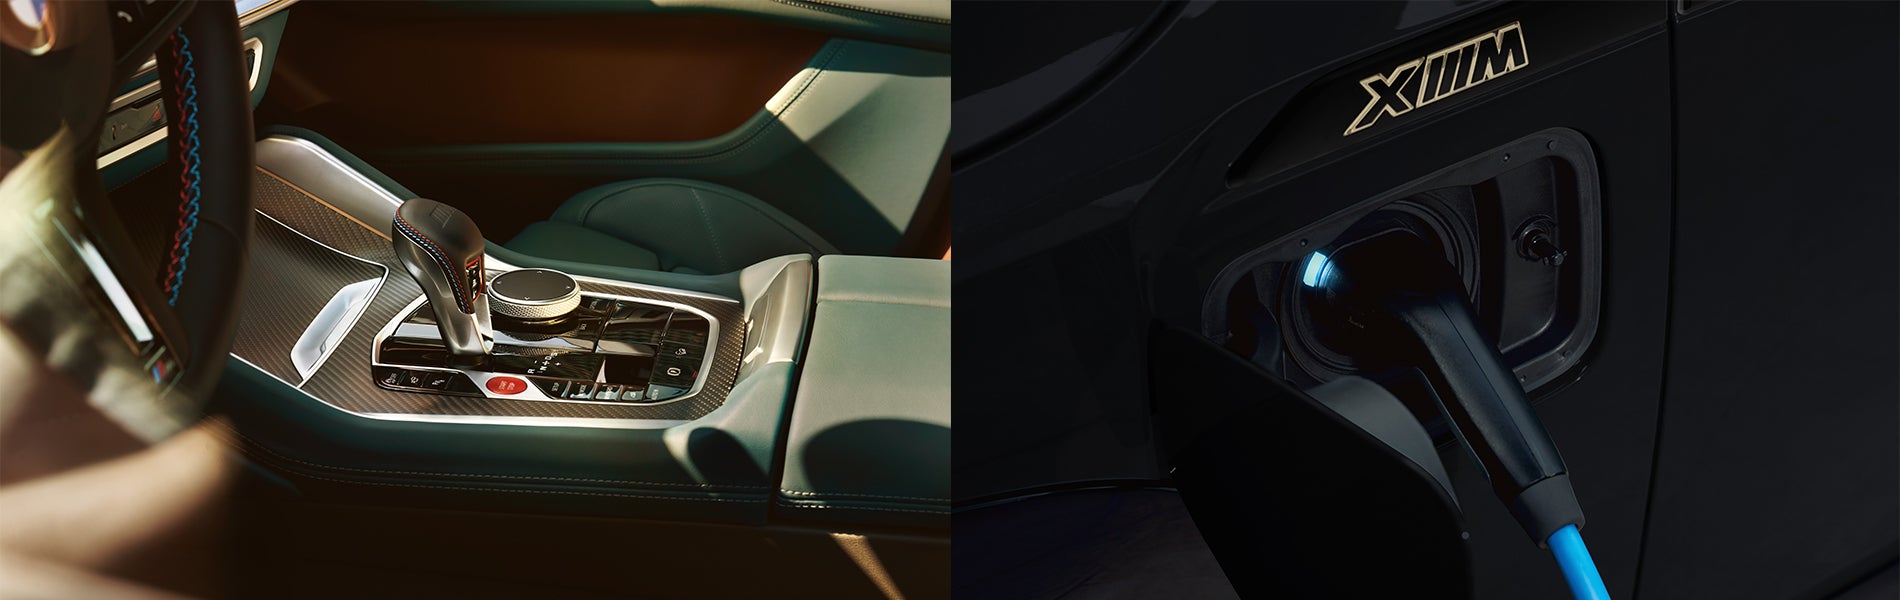 BMW XM Interior shot & Exterior Charging shot. BMW of Okemos in Okemos MI